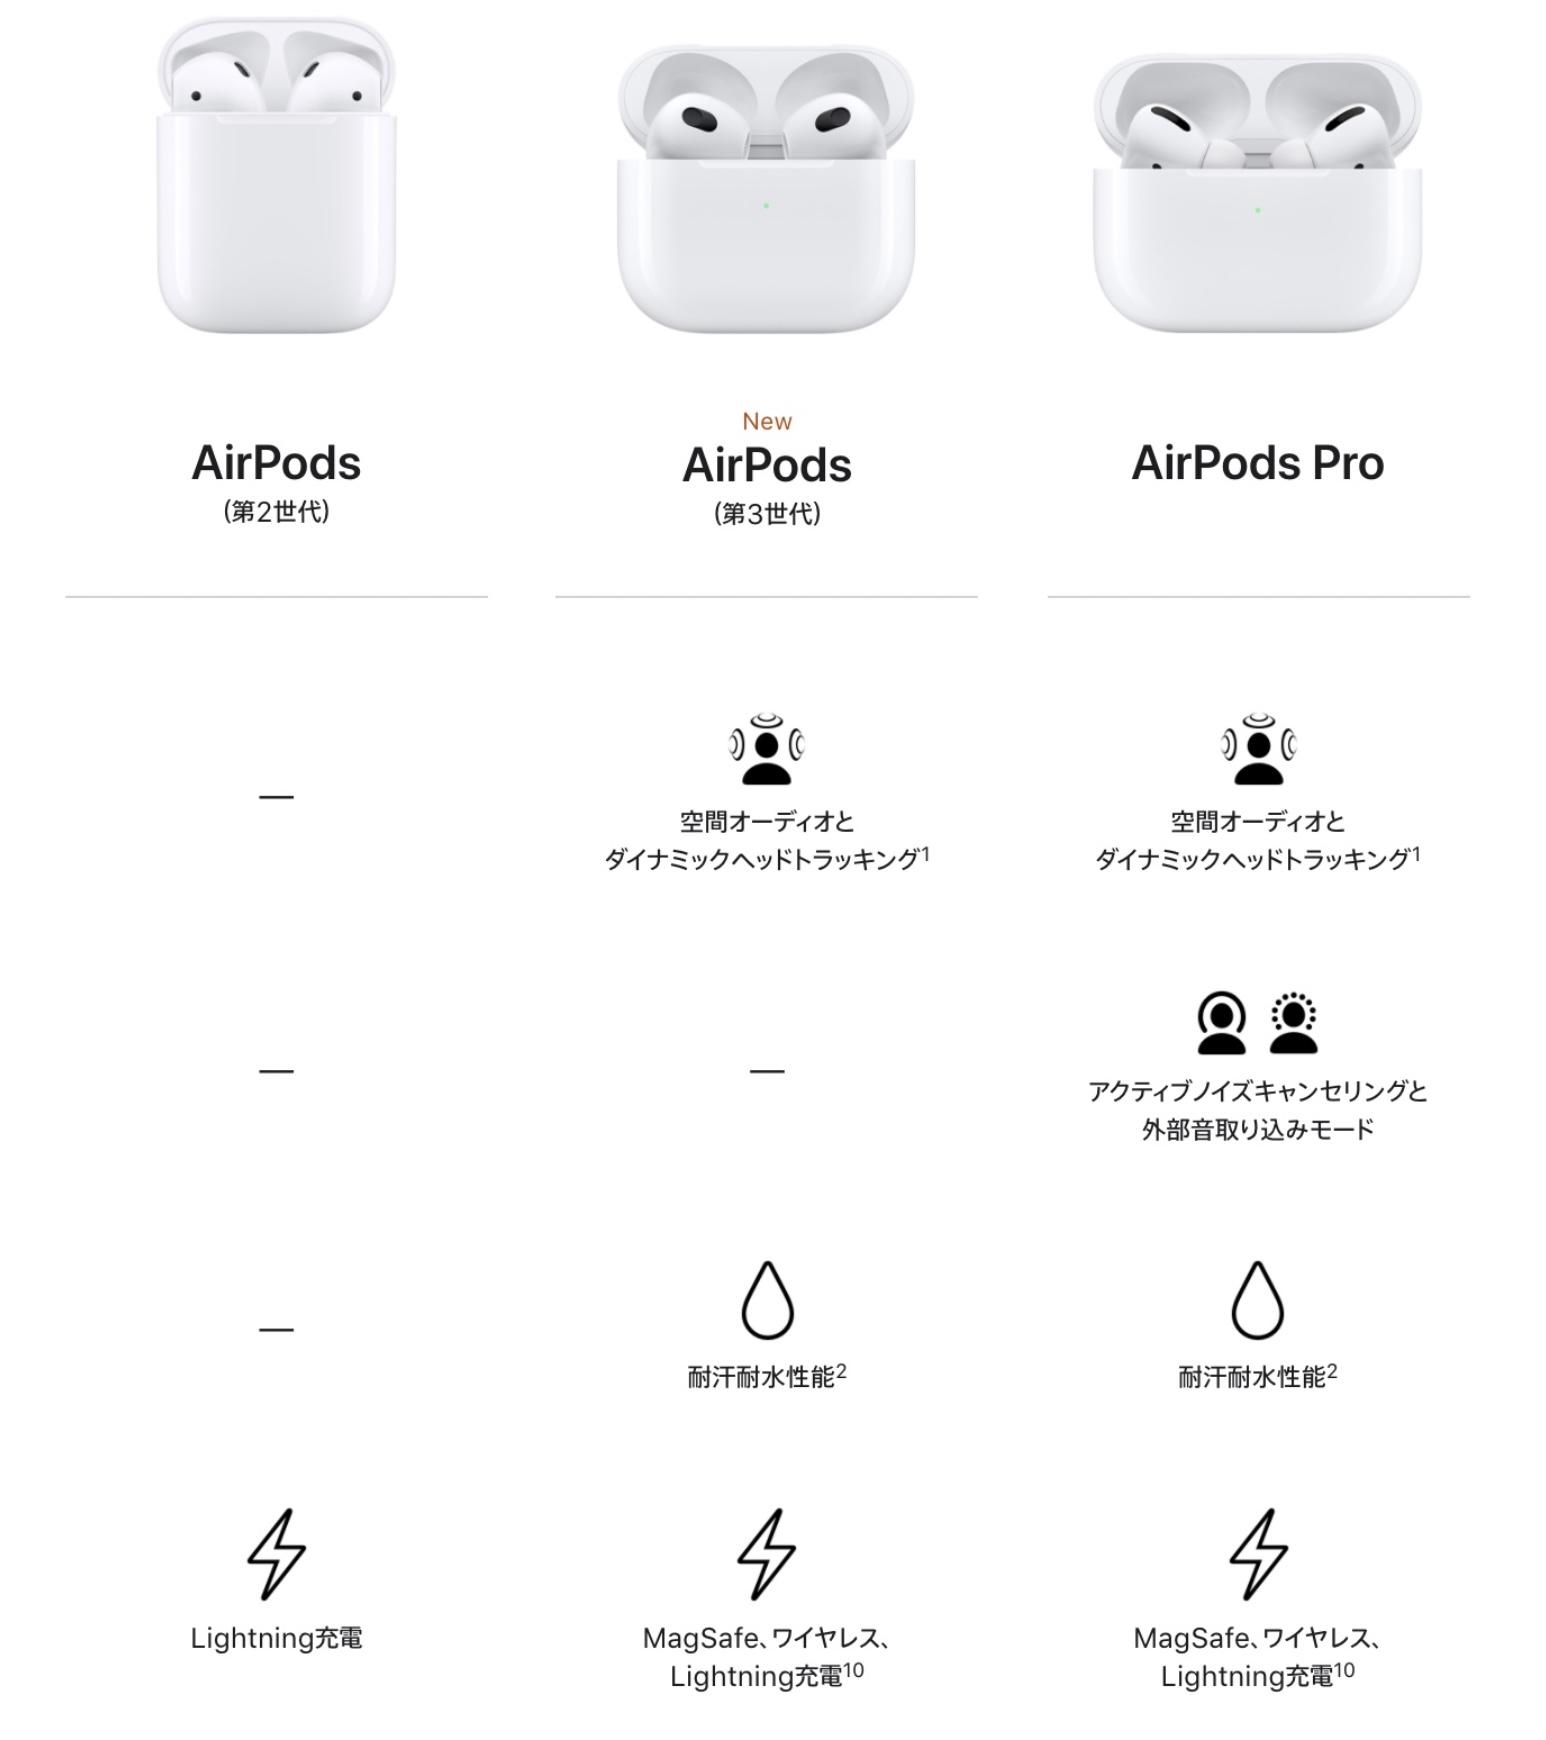 AirPods Pro 機能問題なし - 宮城県の家具